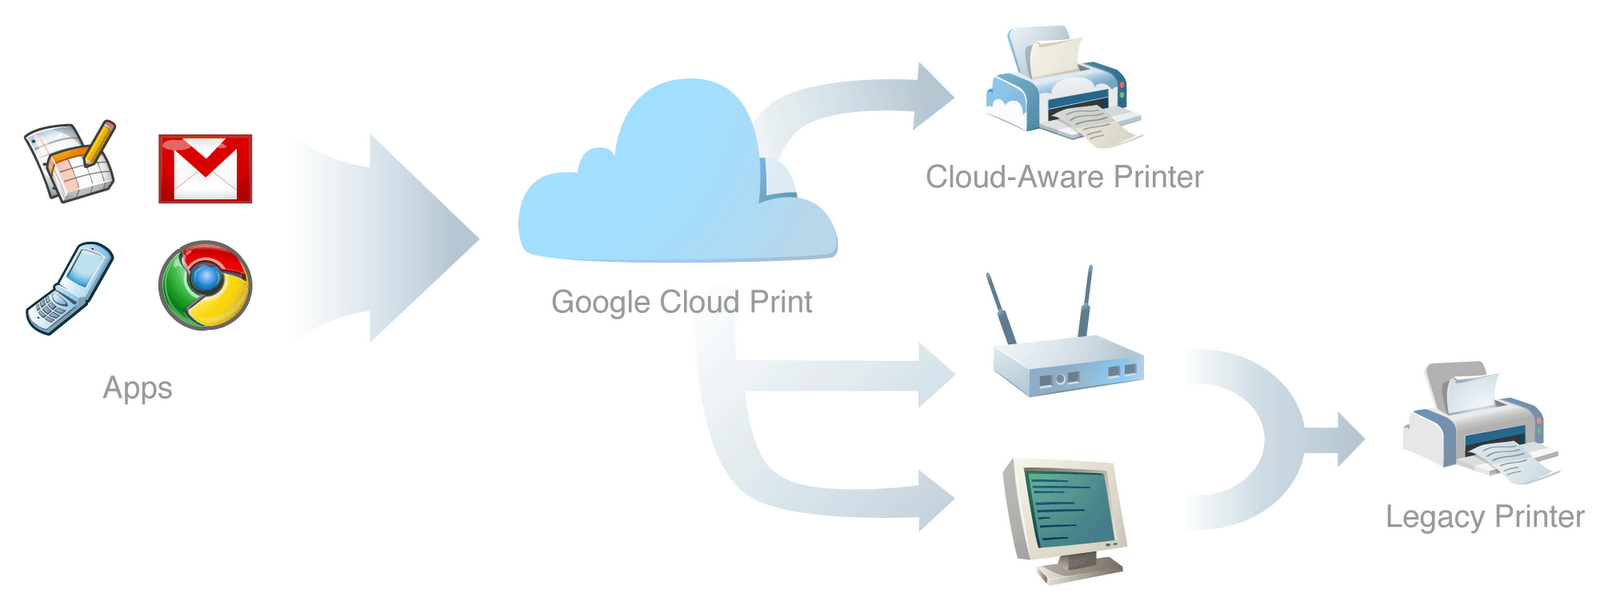 Google Cloud Print Application 